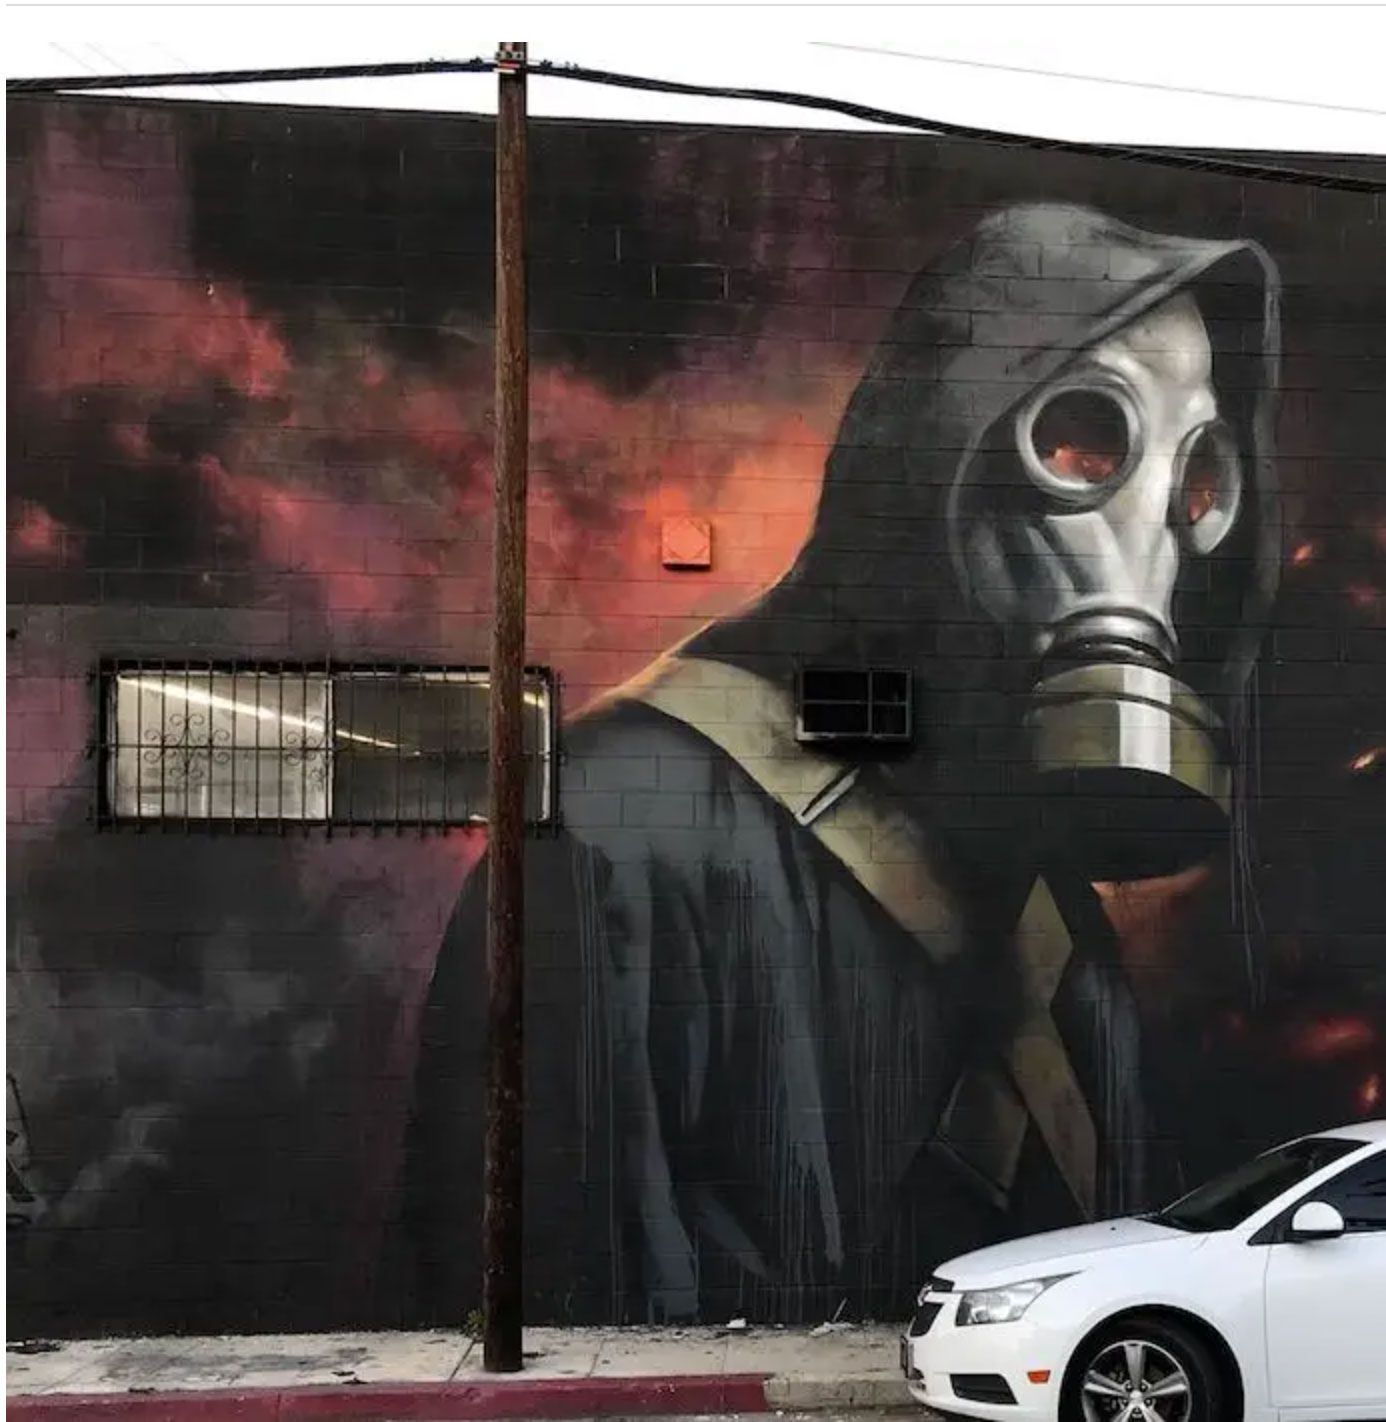 Street art: Stay safe